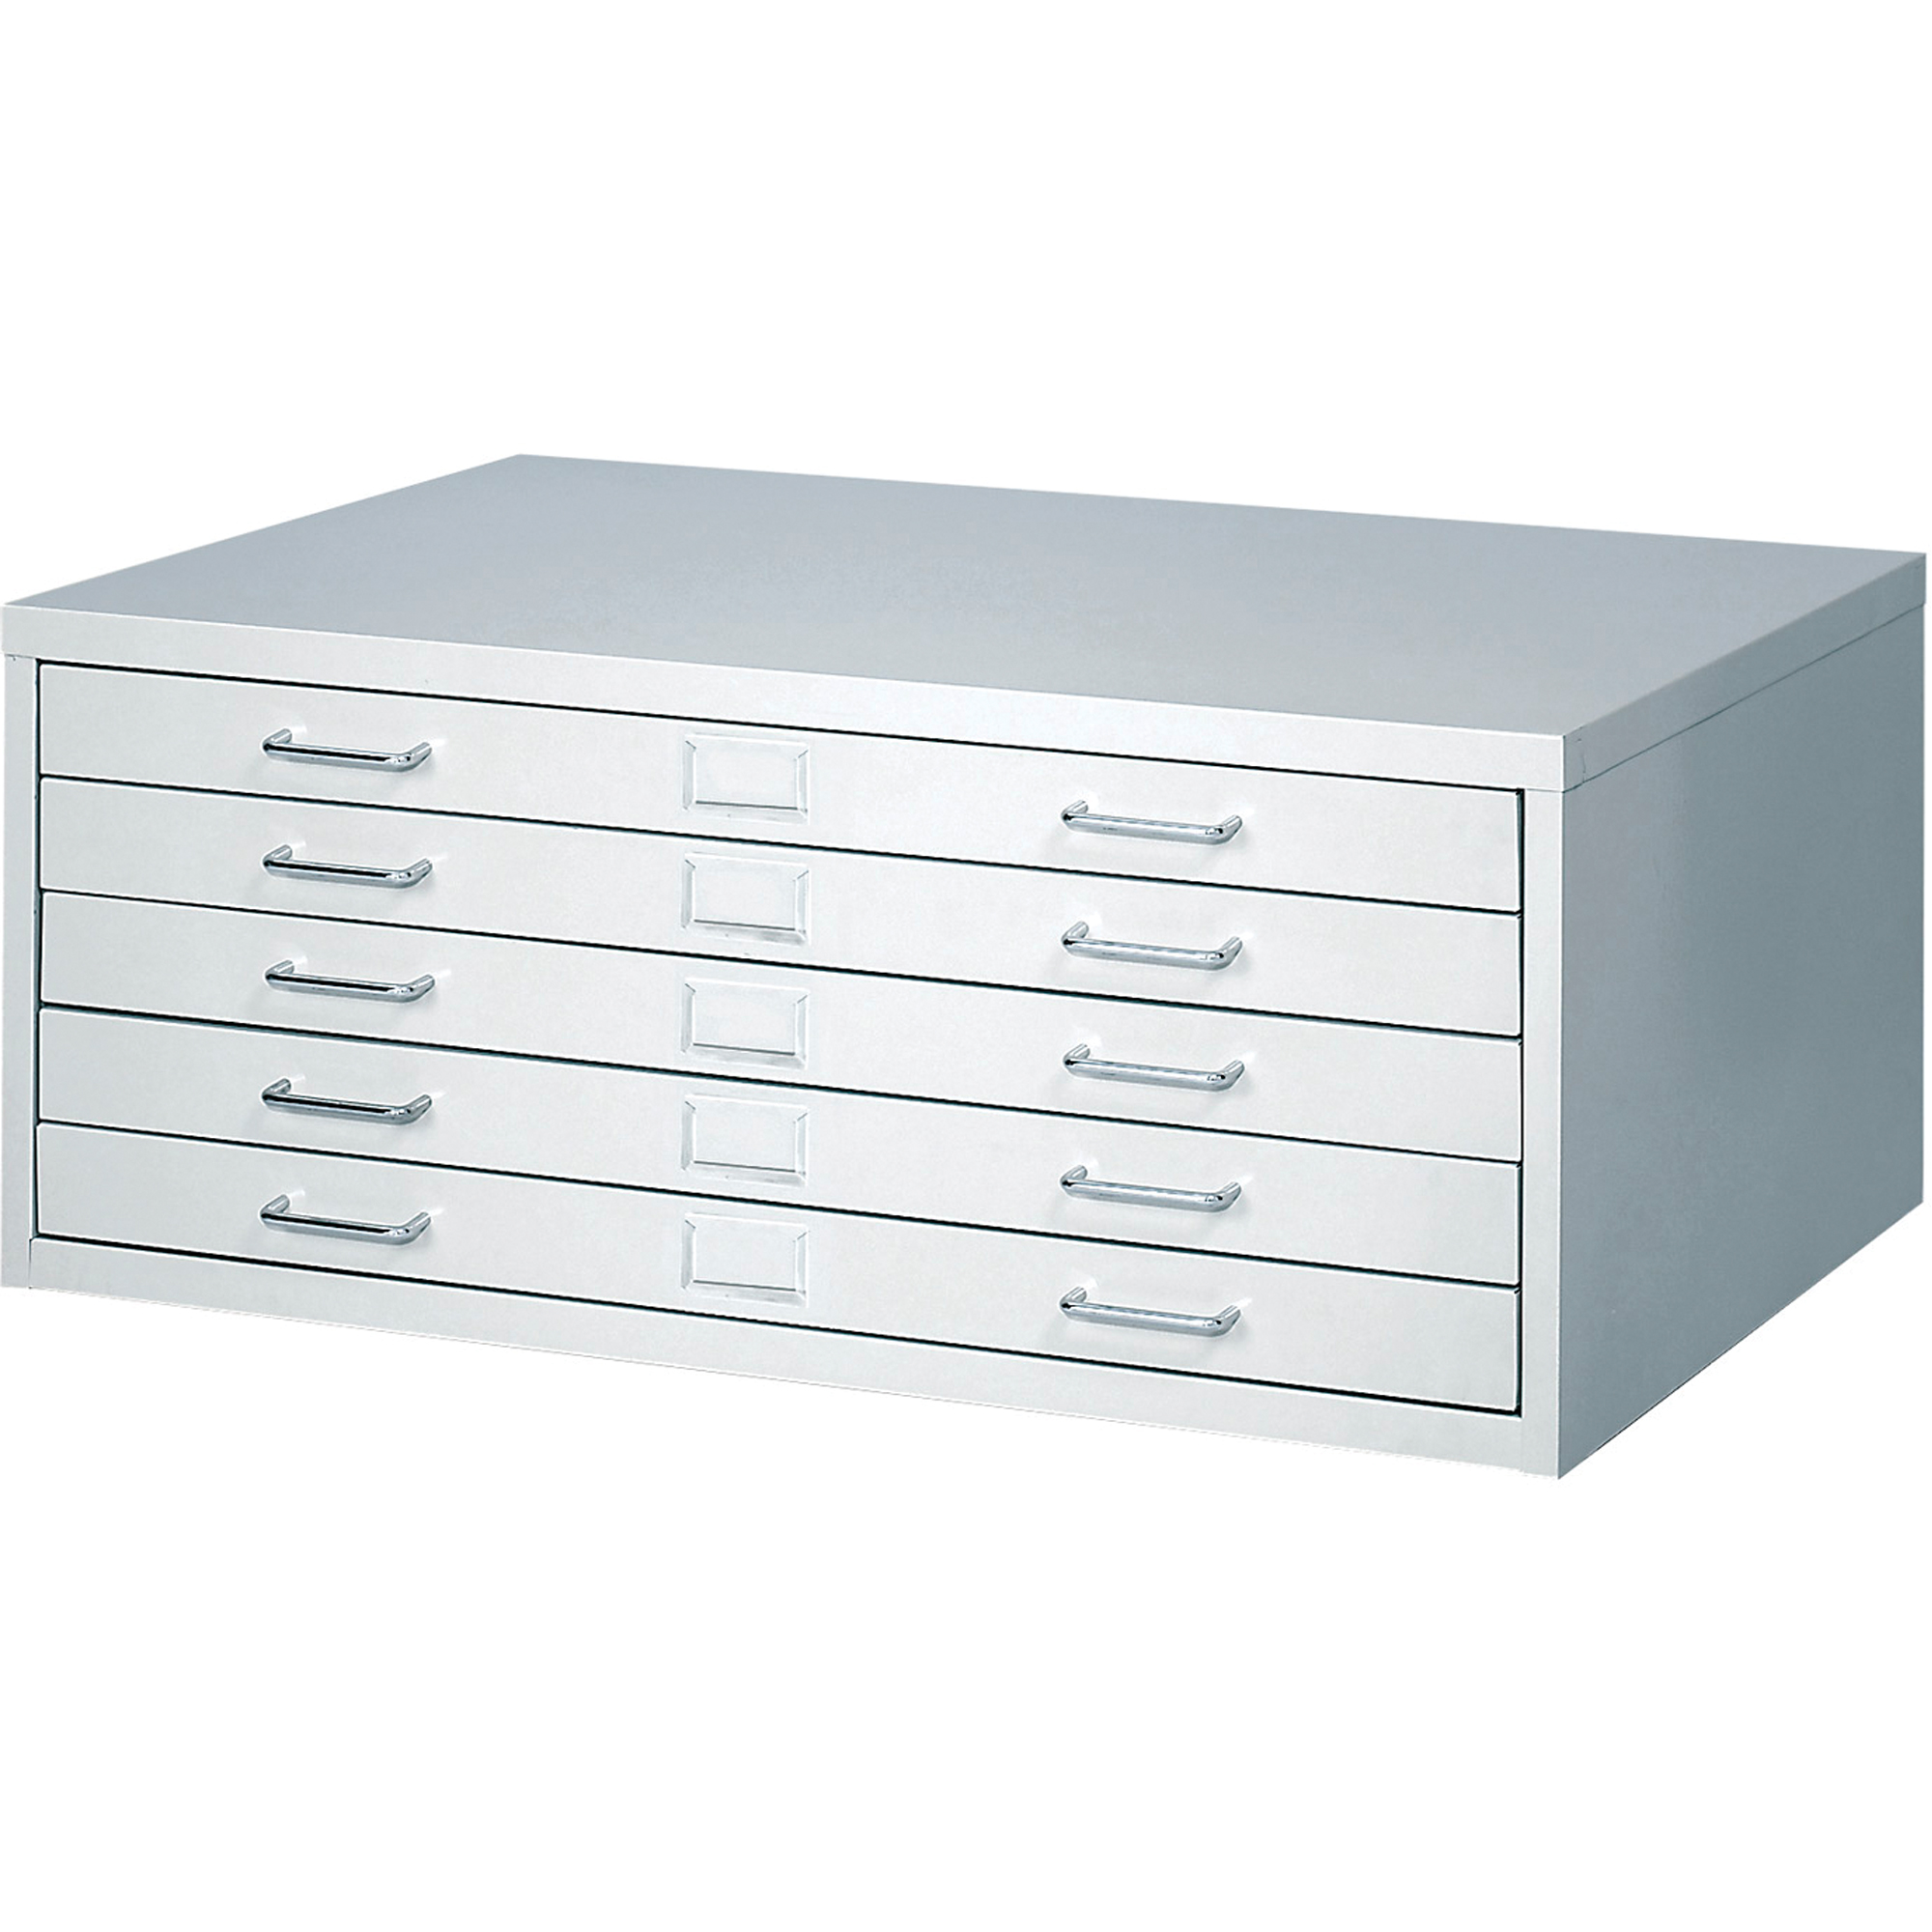 Safco Faciltm Flat File Cabinets Oj915 4969lg Shop Plan File